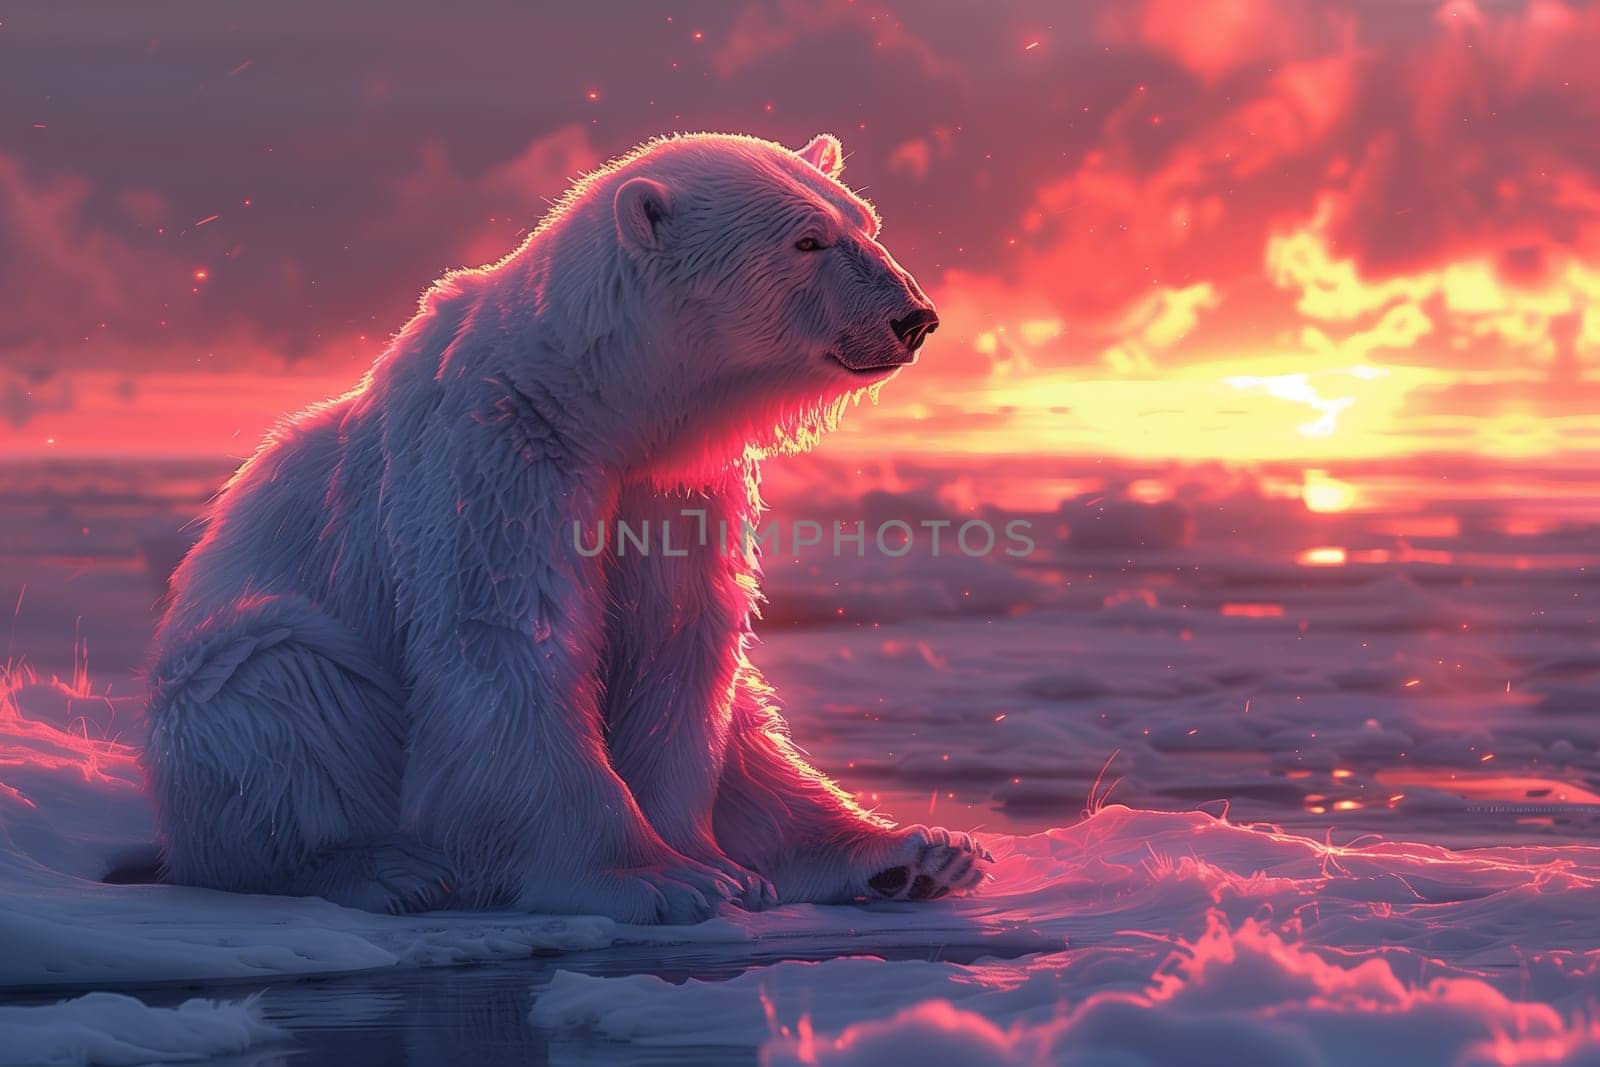 Polar bear, carnivore organism, sitting on ice, watching sunset by richwolf